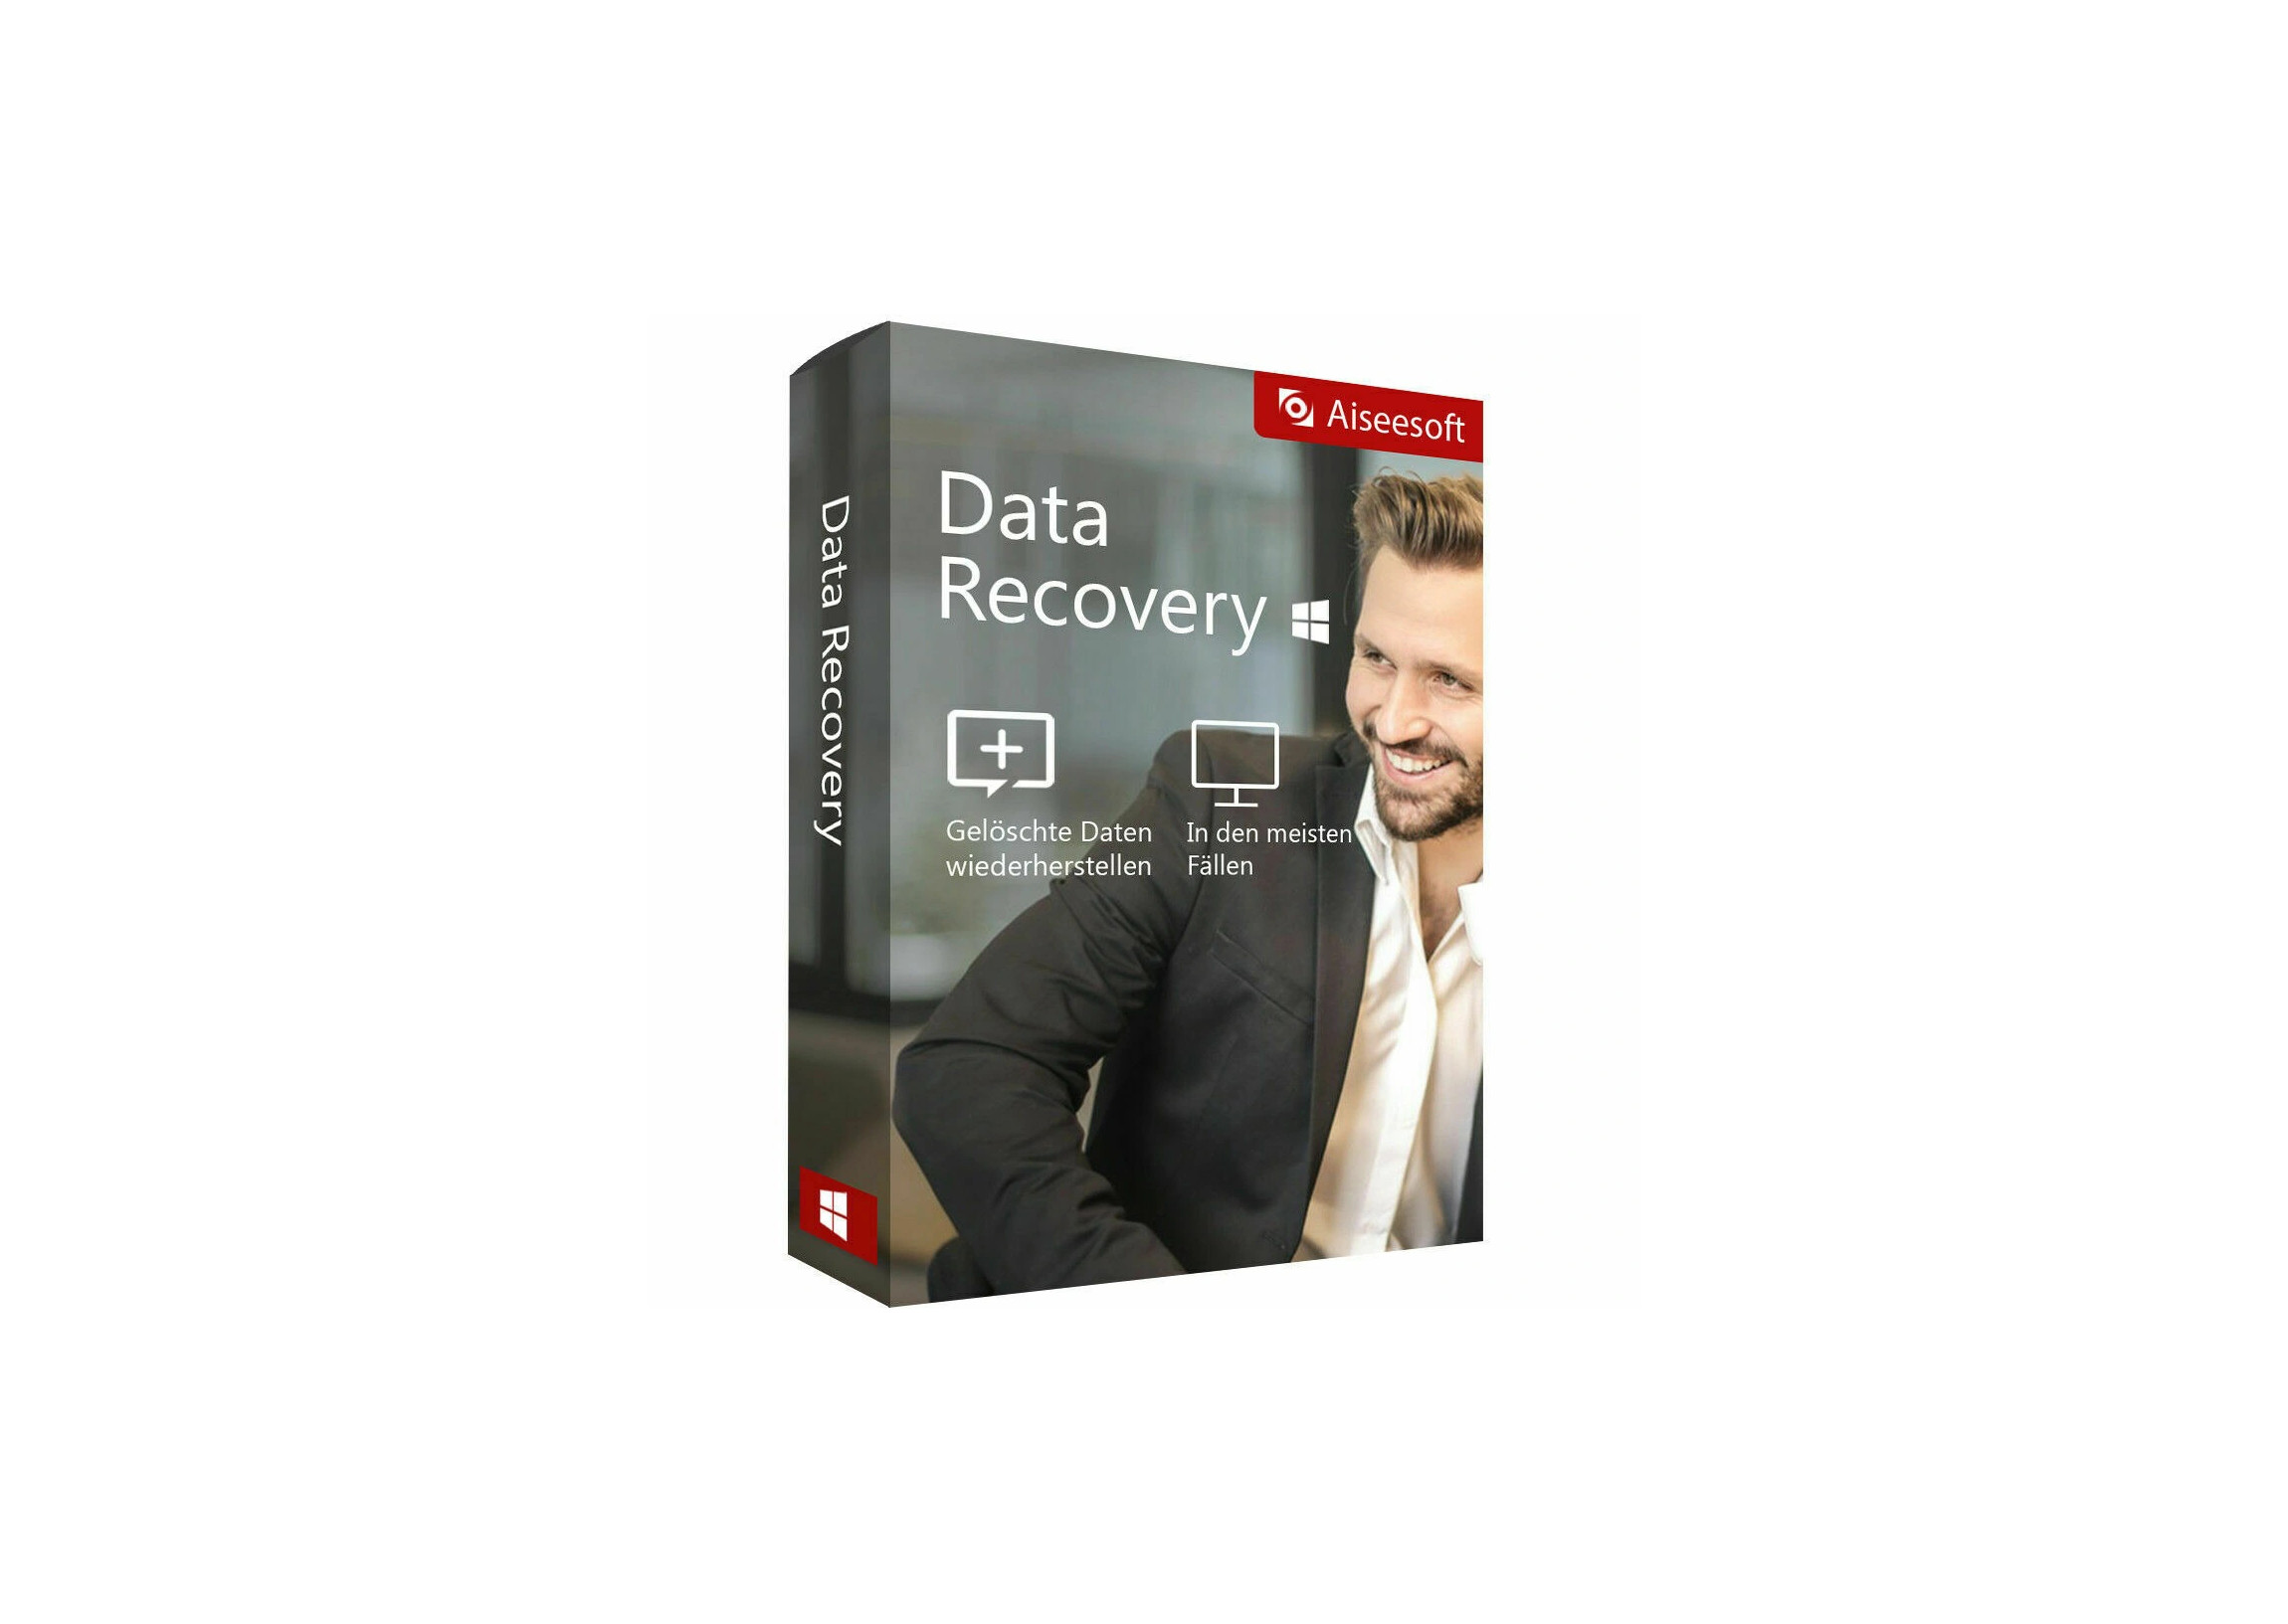 Aiseesoft Data Recovery Key (1 Year / 1 PC) 2.25$